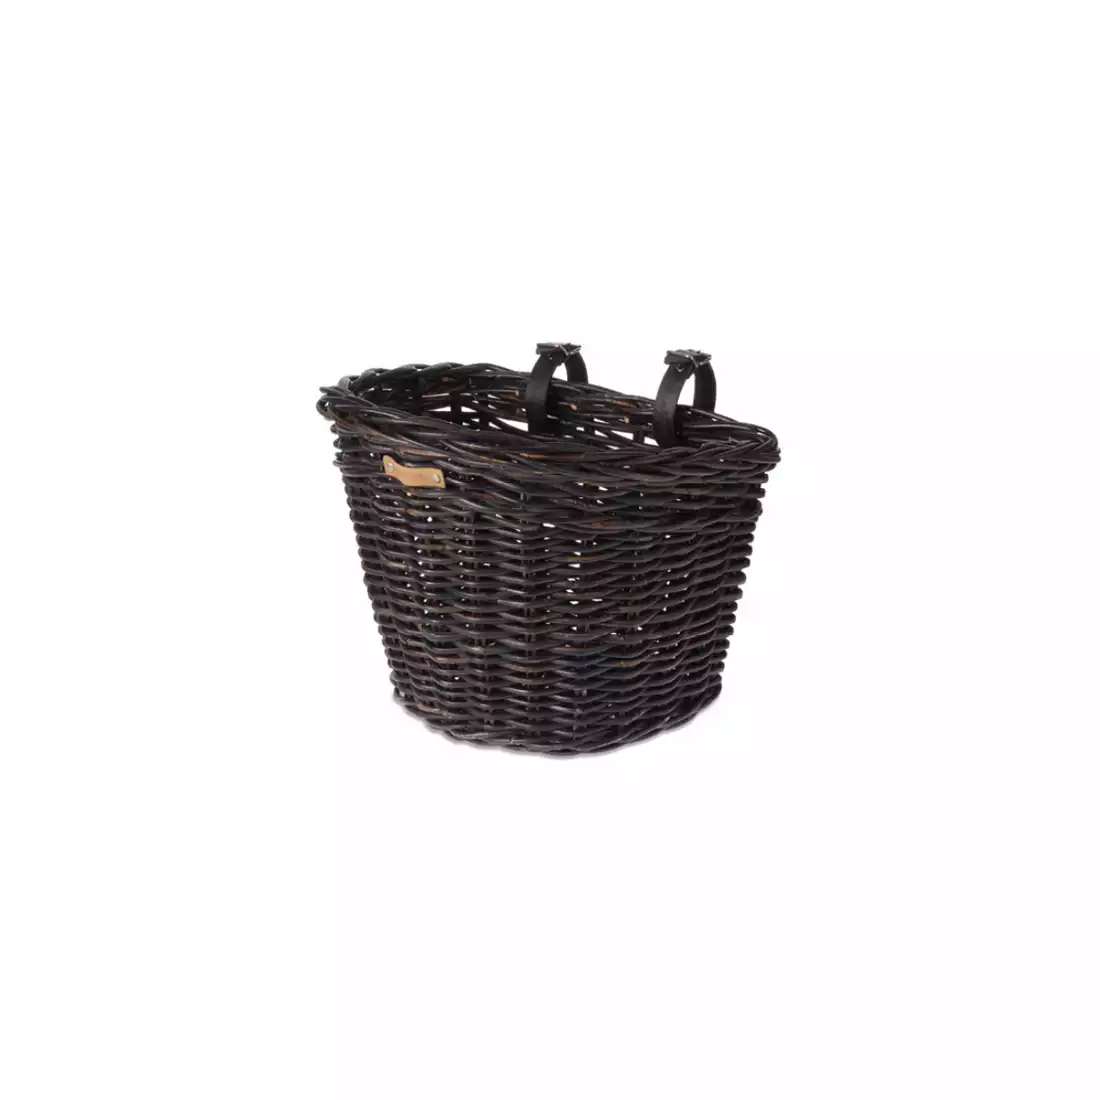 Basil Baskets Pluto Front Pet Wicker Basket Natural N/A 